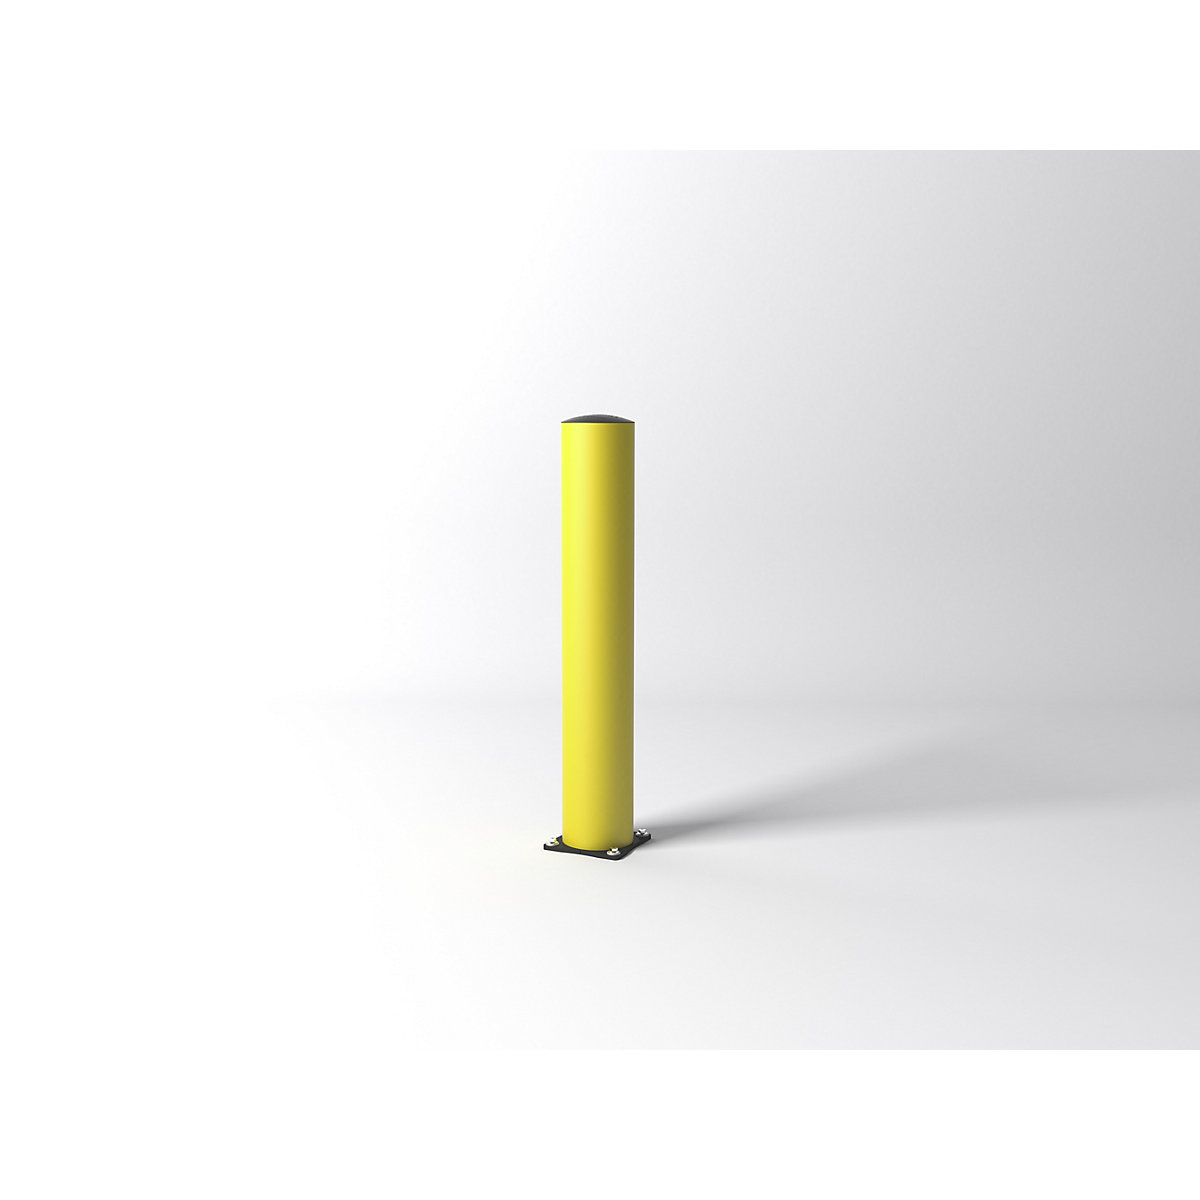 FLEX IMPACT Rammschutzpoller, Ø 200 mm, Höhe 1200 mm, gelb, verzinkte Bodenplatte